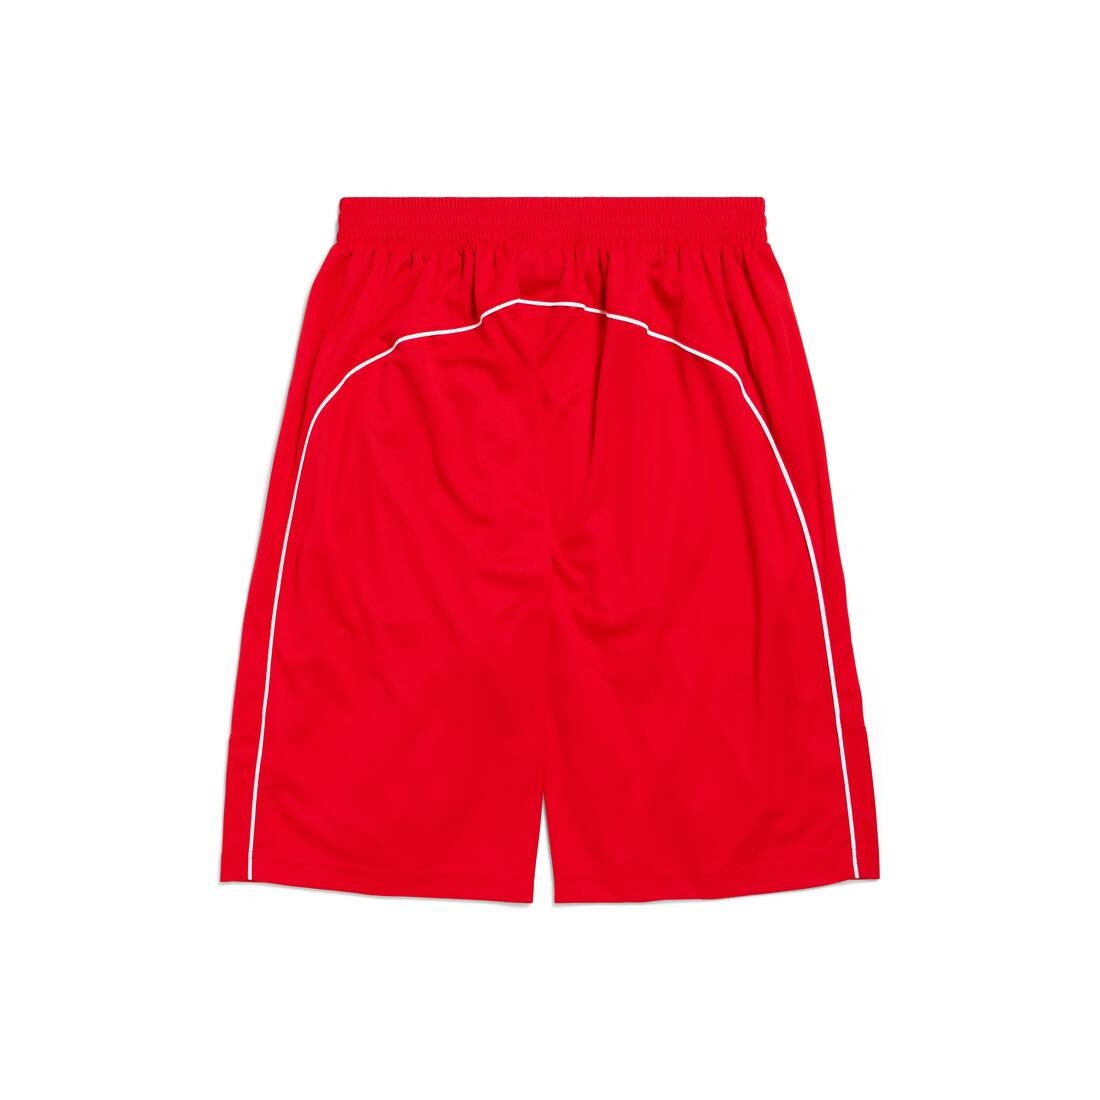 Men's Soccer Baggy Shorts in Red/white - 6